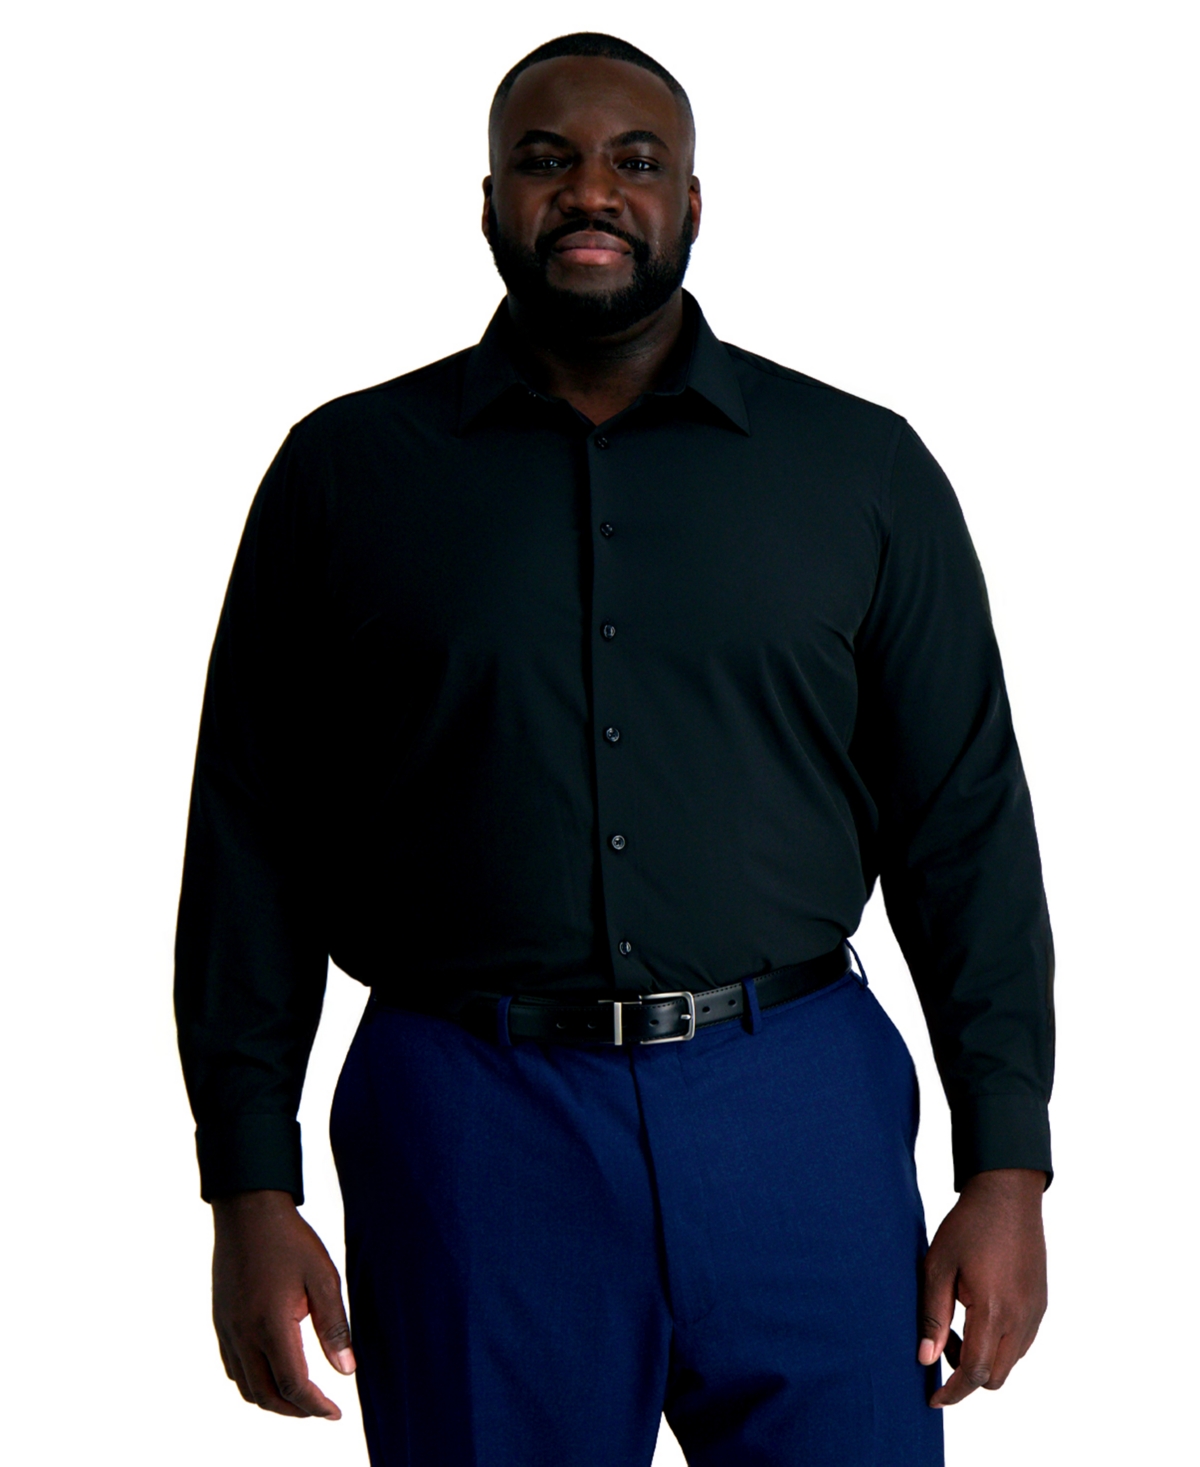 Shop Haggar Big & Tall  Men's Smart Wash Classic Fit Dress Shirt In Black